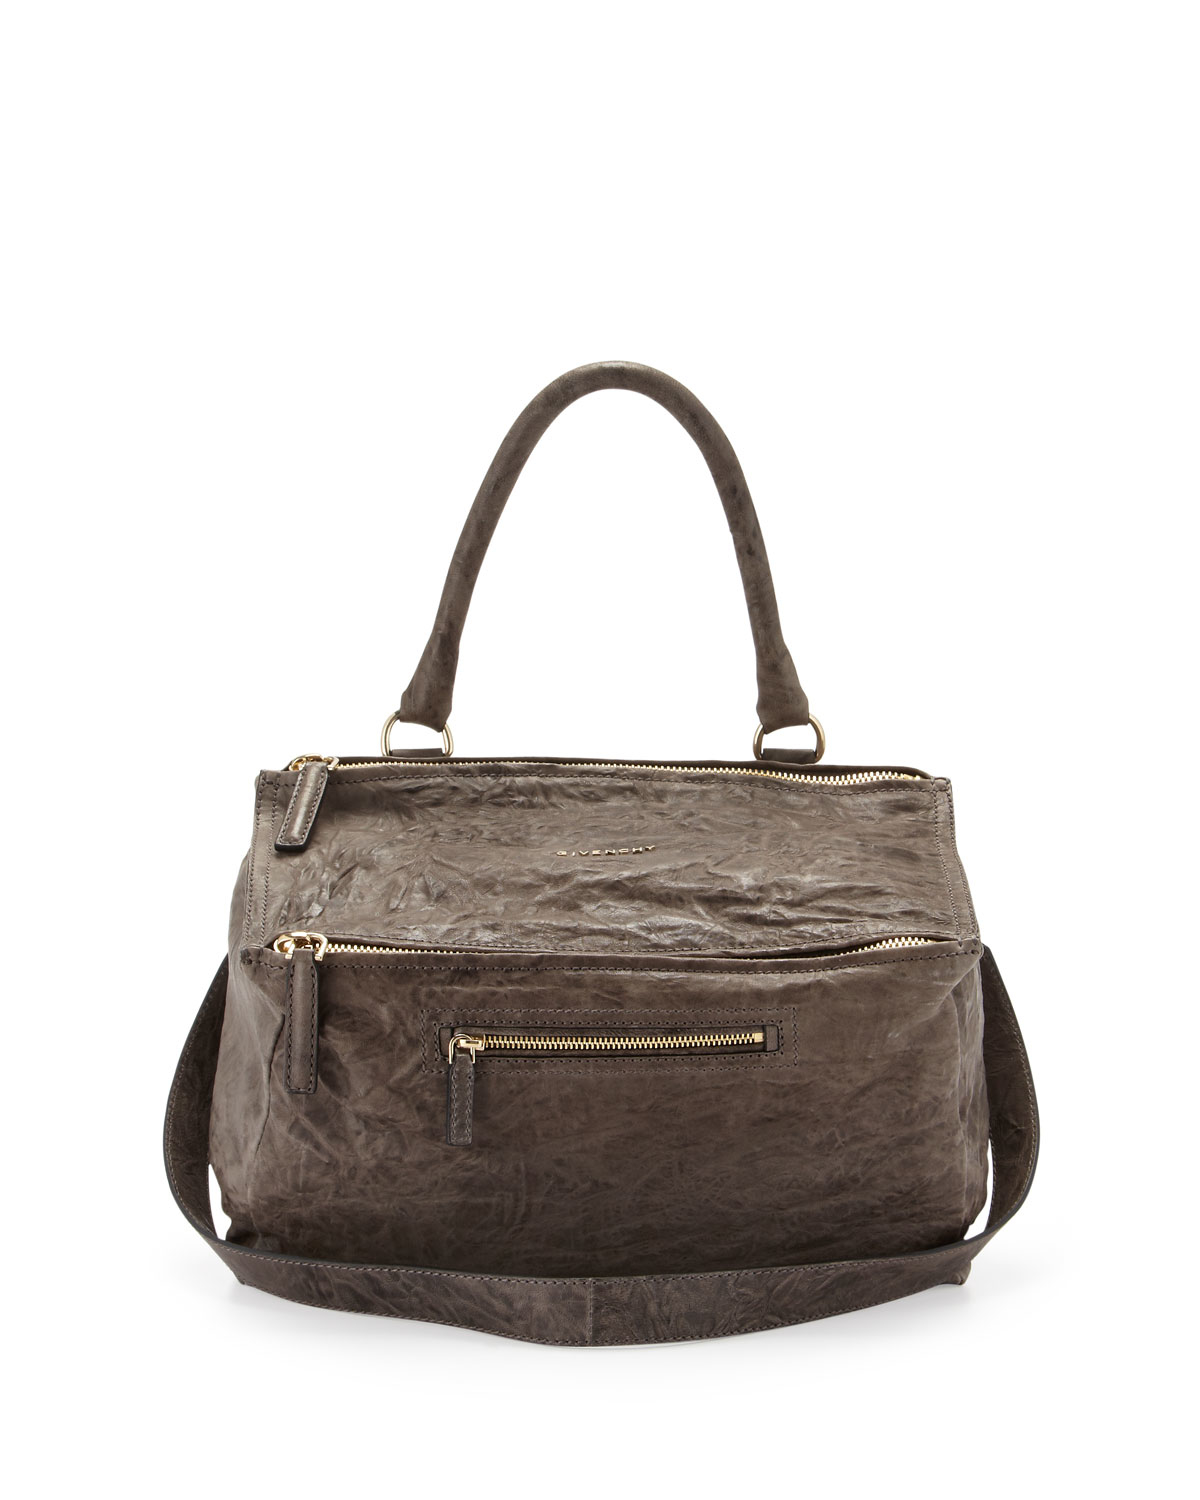 Givenchy Pandora Medium Leather Satchel Bag in Gray | Lyst